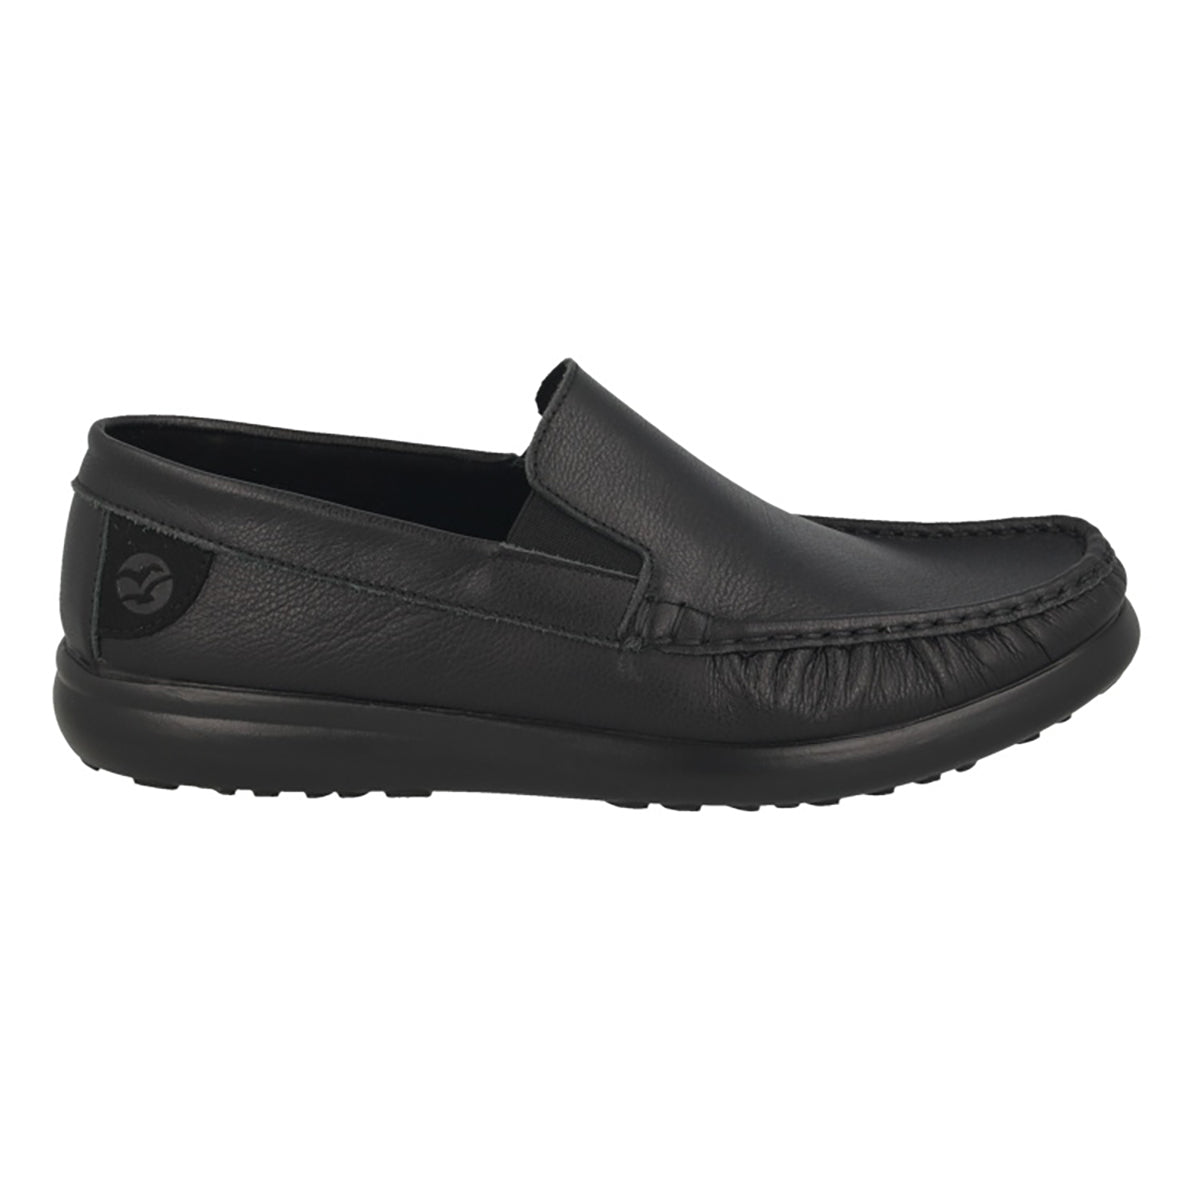 Leather Man Shoe Black  (140627   3G)